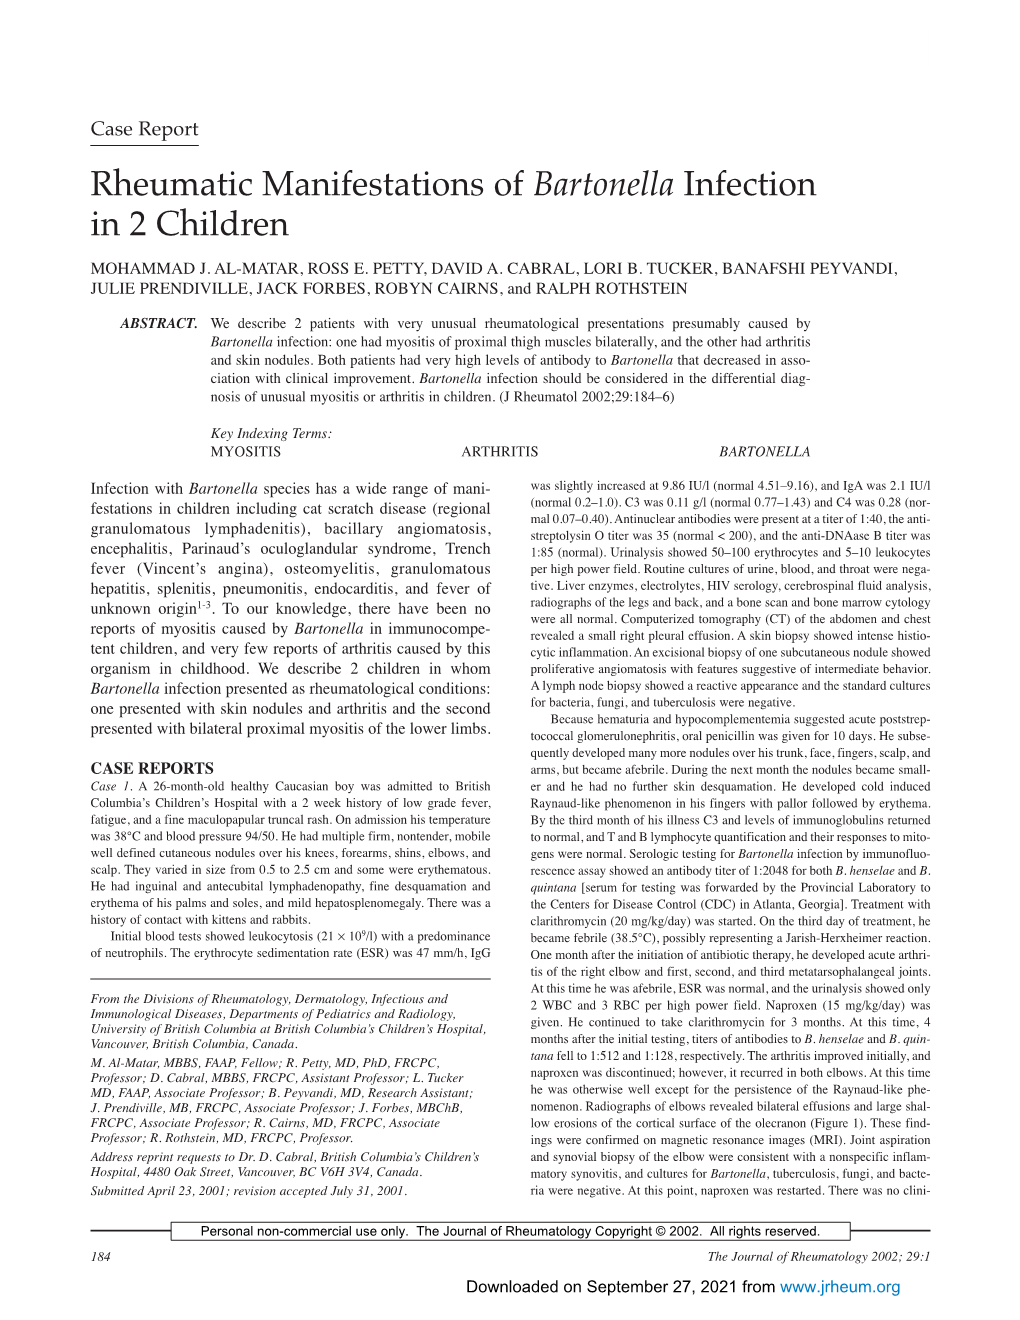 Rheumatic Manifestations of Bartonella Infection in 2 Children MOHAMMAD J